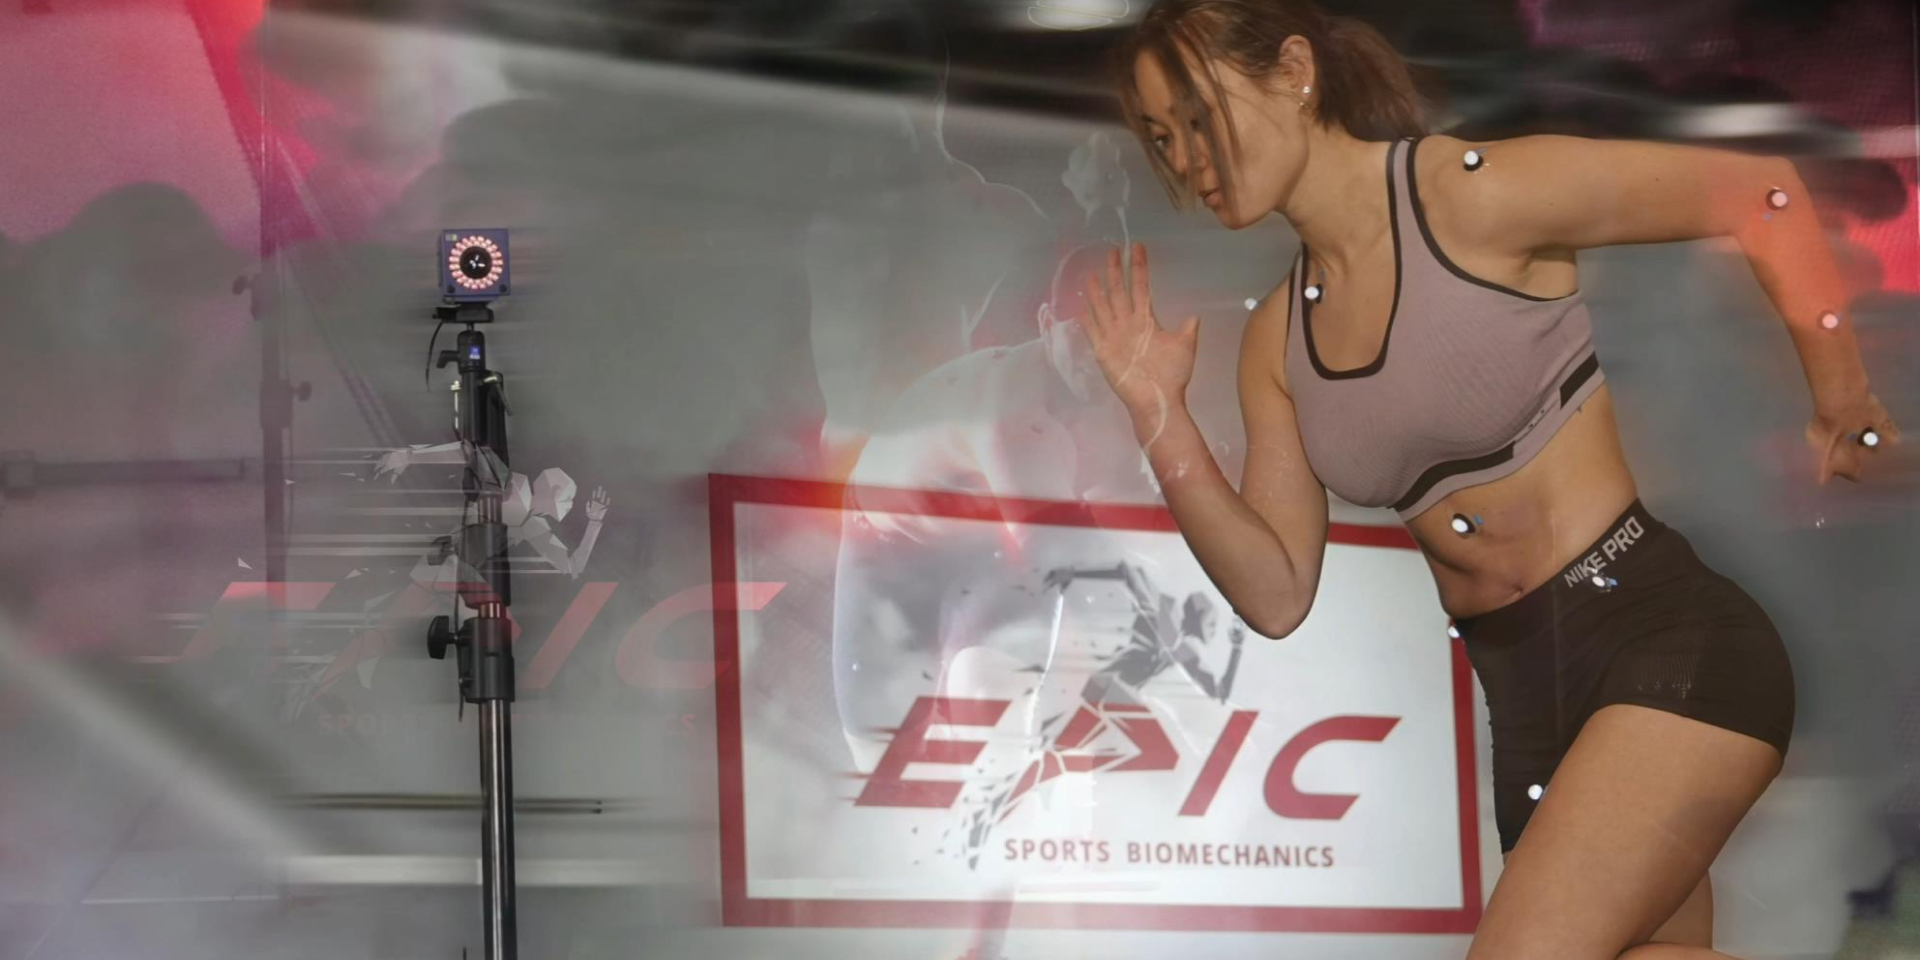 female athlete training with biometric cameras